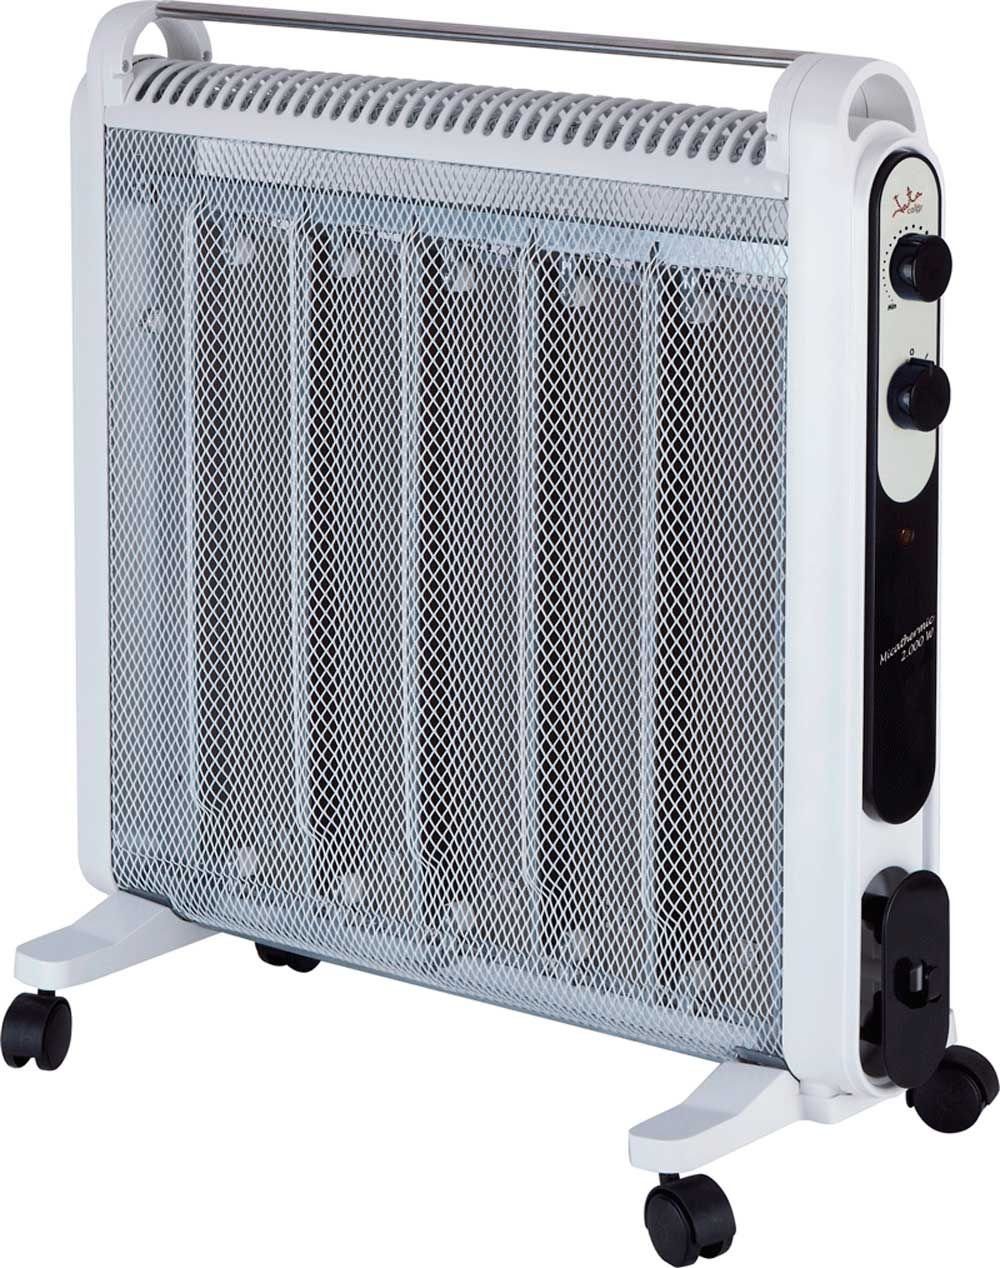 Jata Heizgerät Micathermic Heater W, 2000 RD227B Leise, Elektroheizung Sparsam, Energie sparen, Lautlos, 2000W